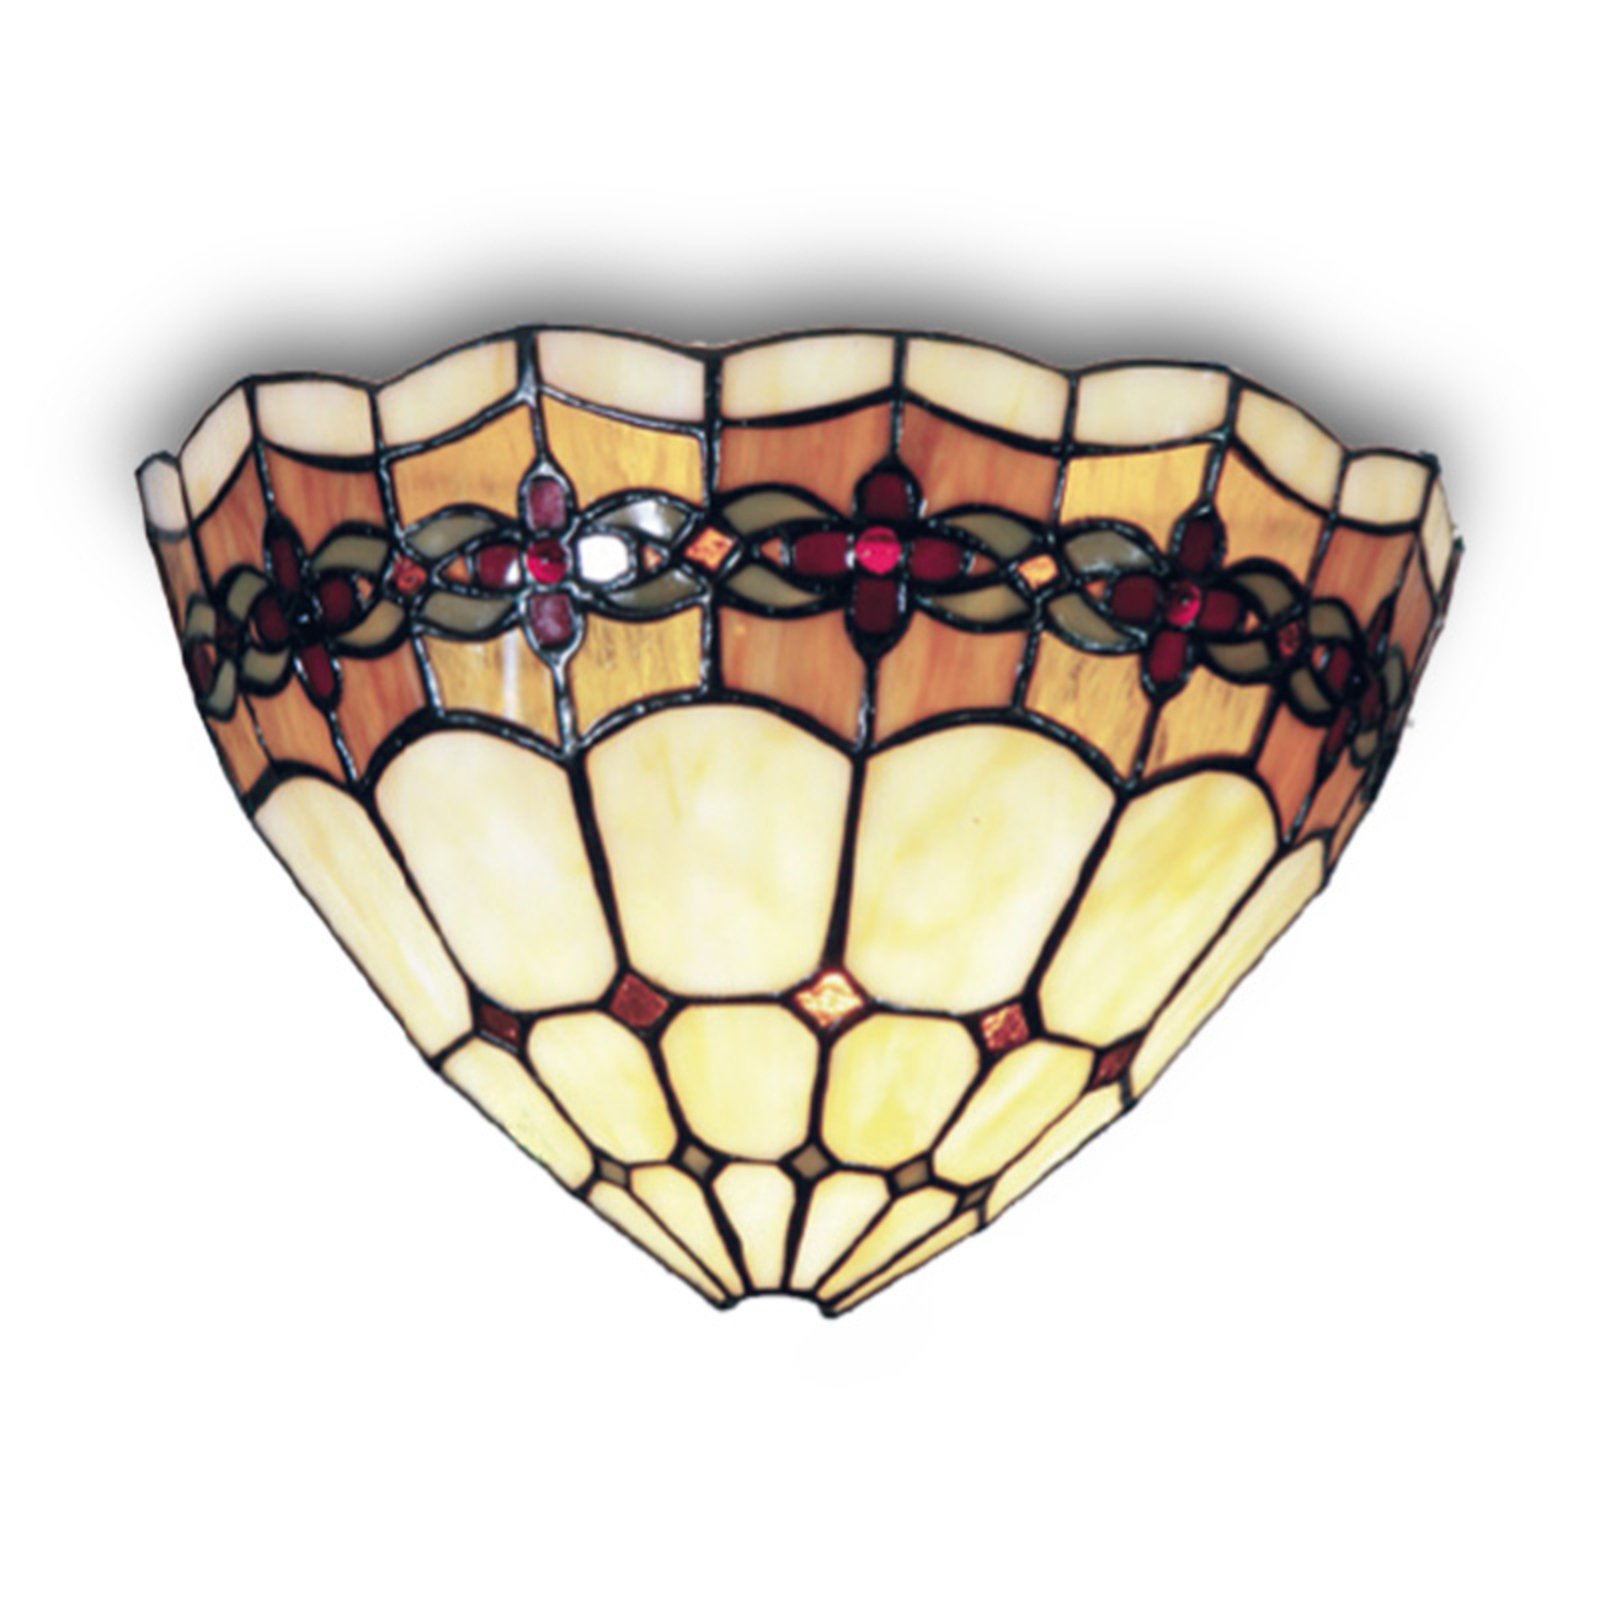 Lampada da parete Weena decorata in stile Tiffany